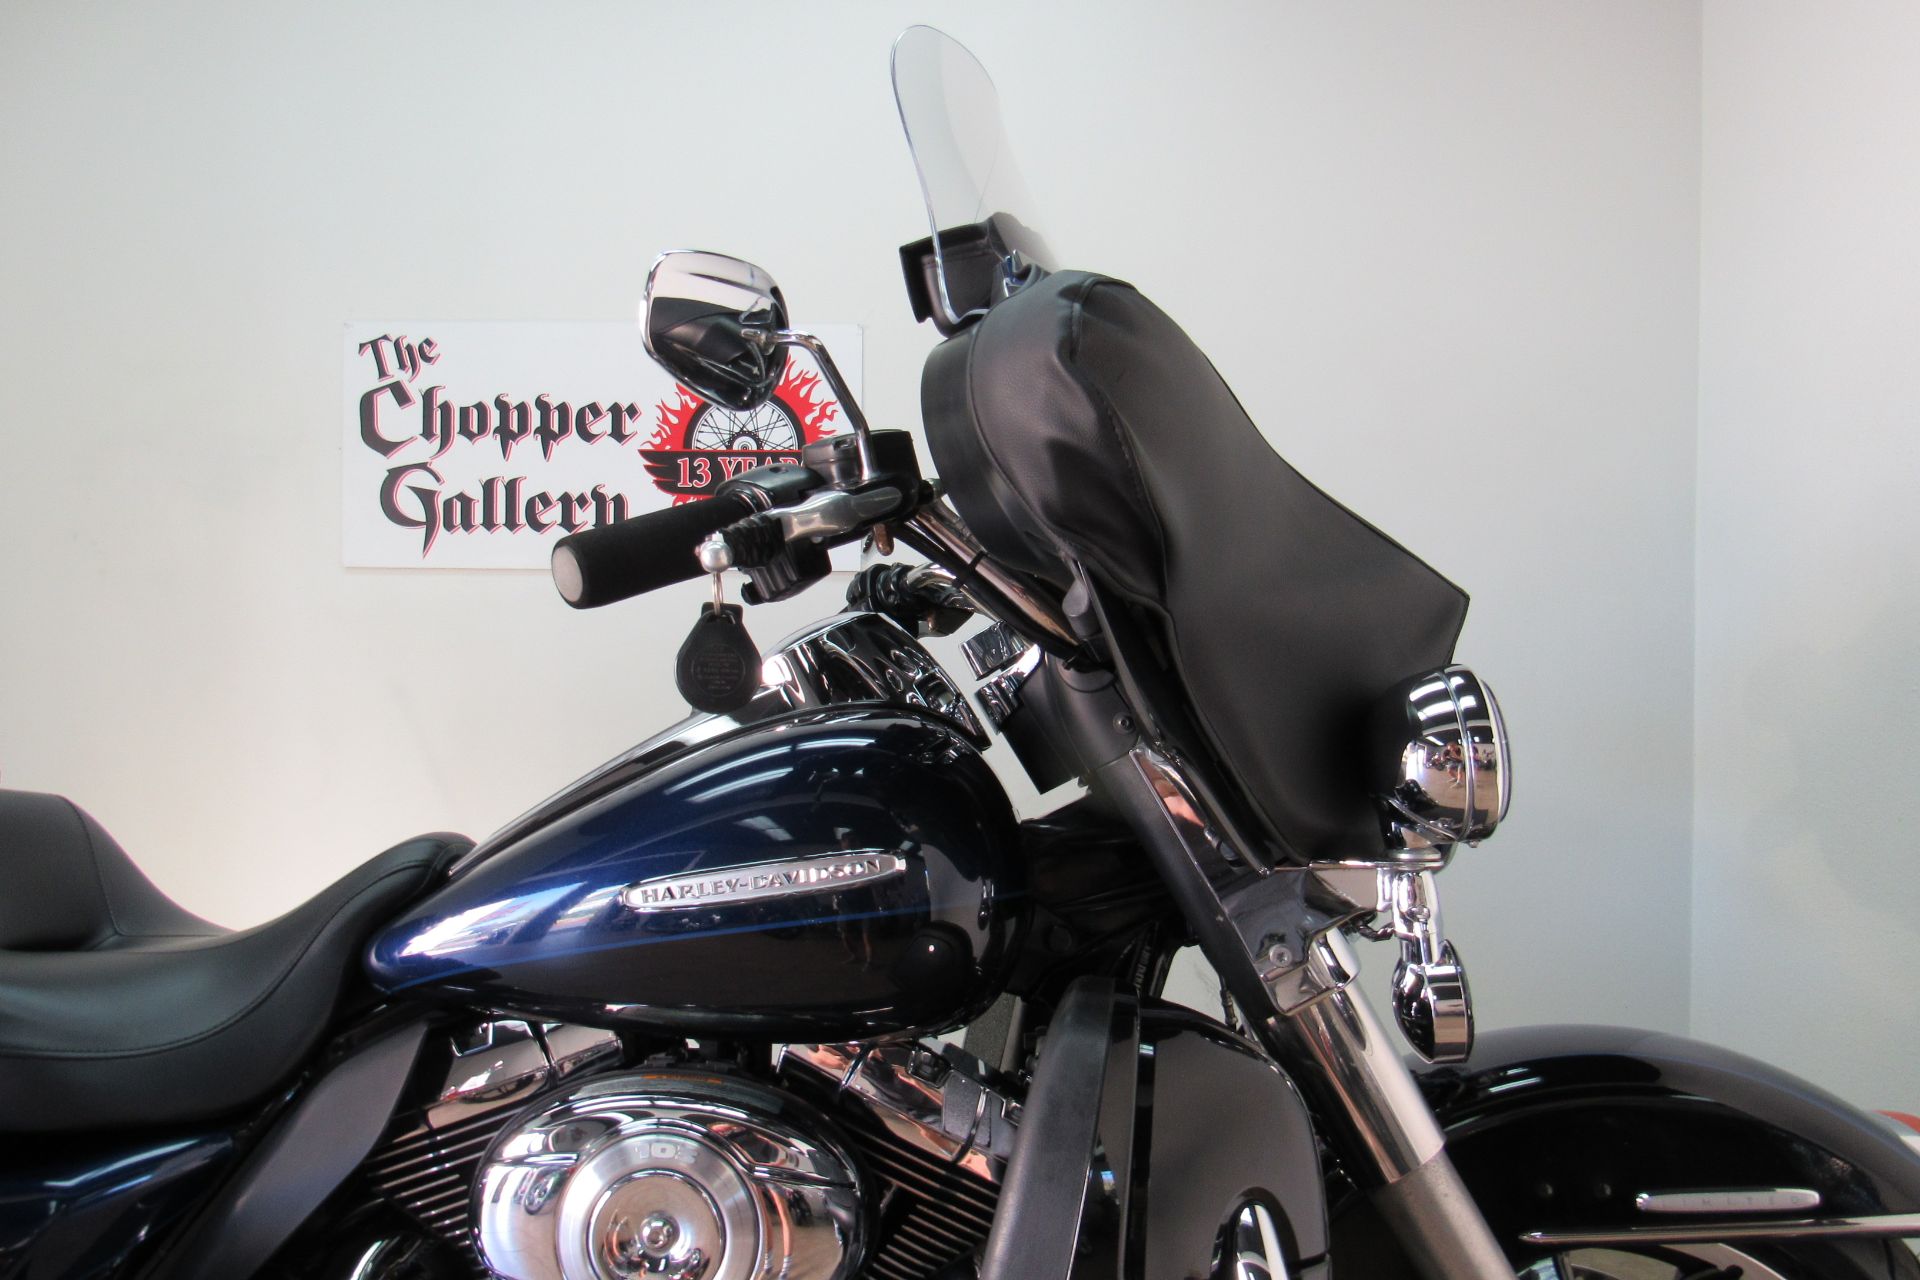 2012 Harley-Davidson Electra Glide® Ultra Limited in Temecula, California - Photo 9